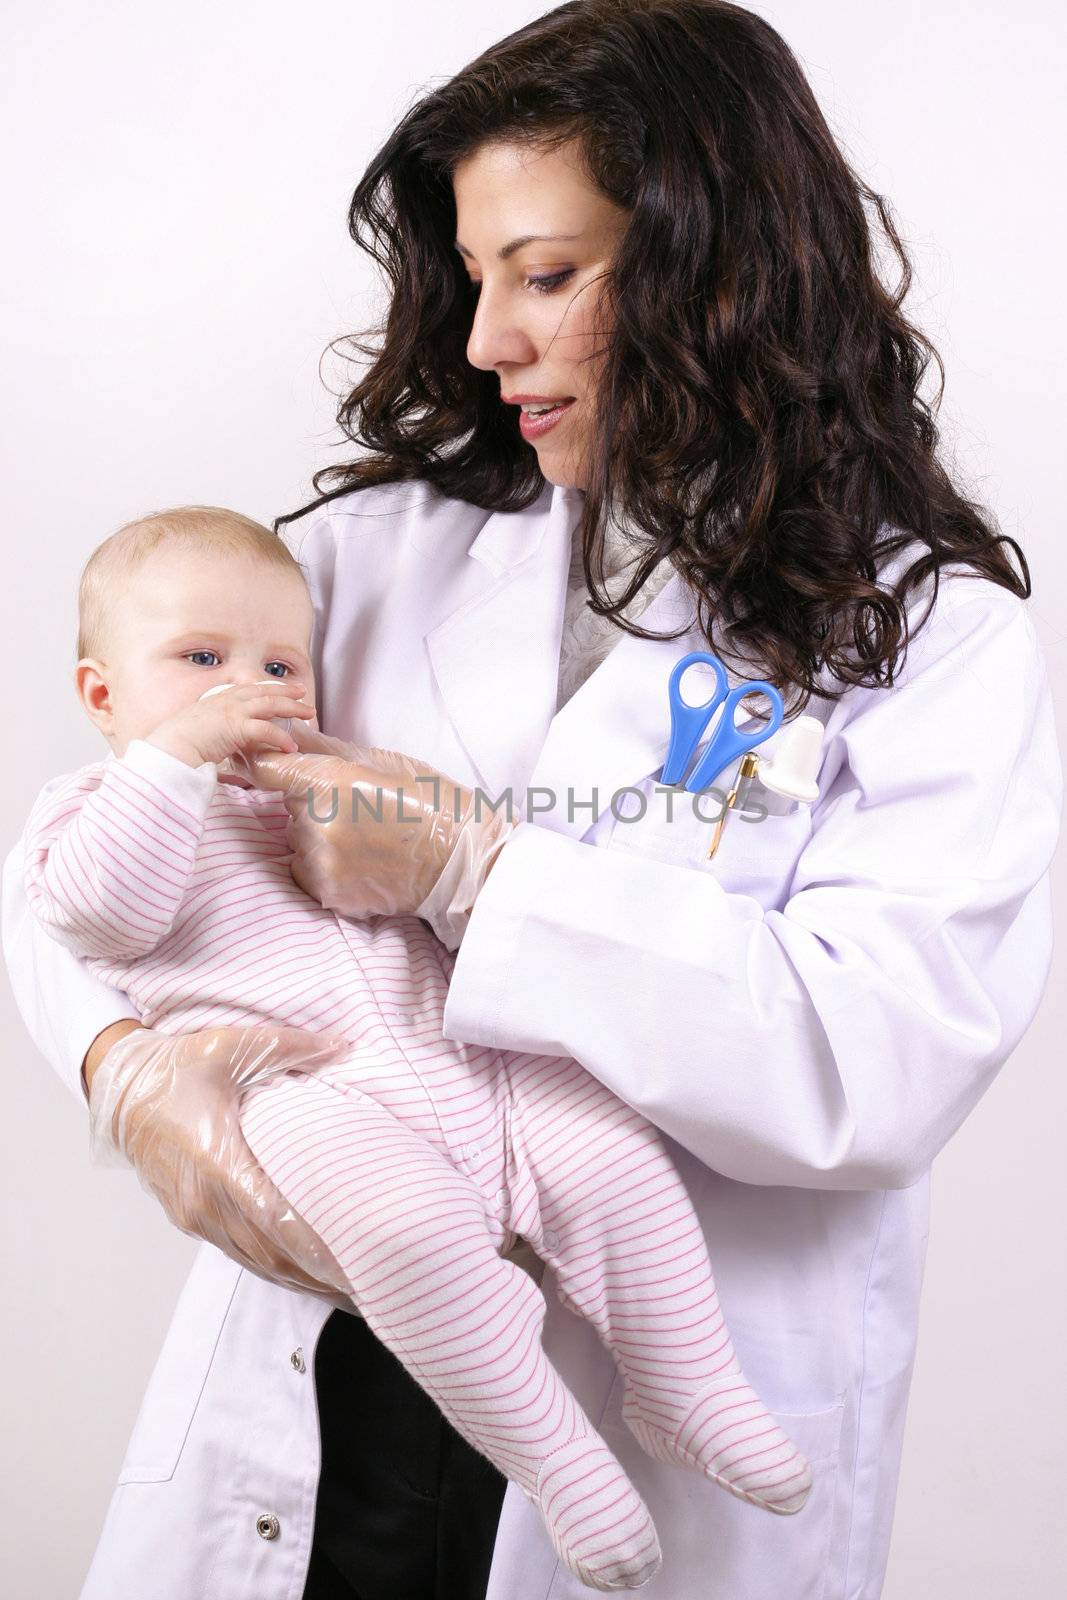 Doctor Medicating baby by lovleah